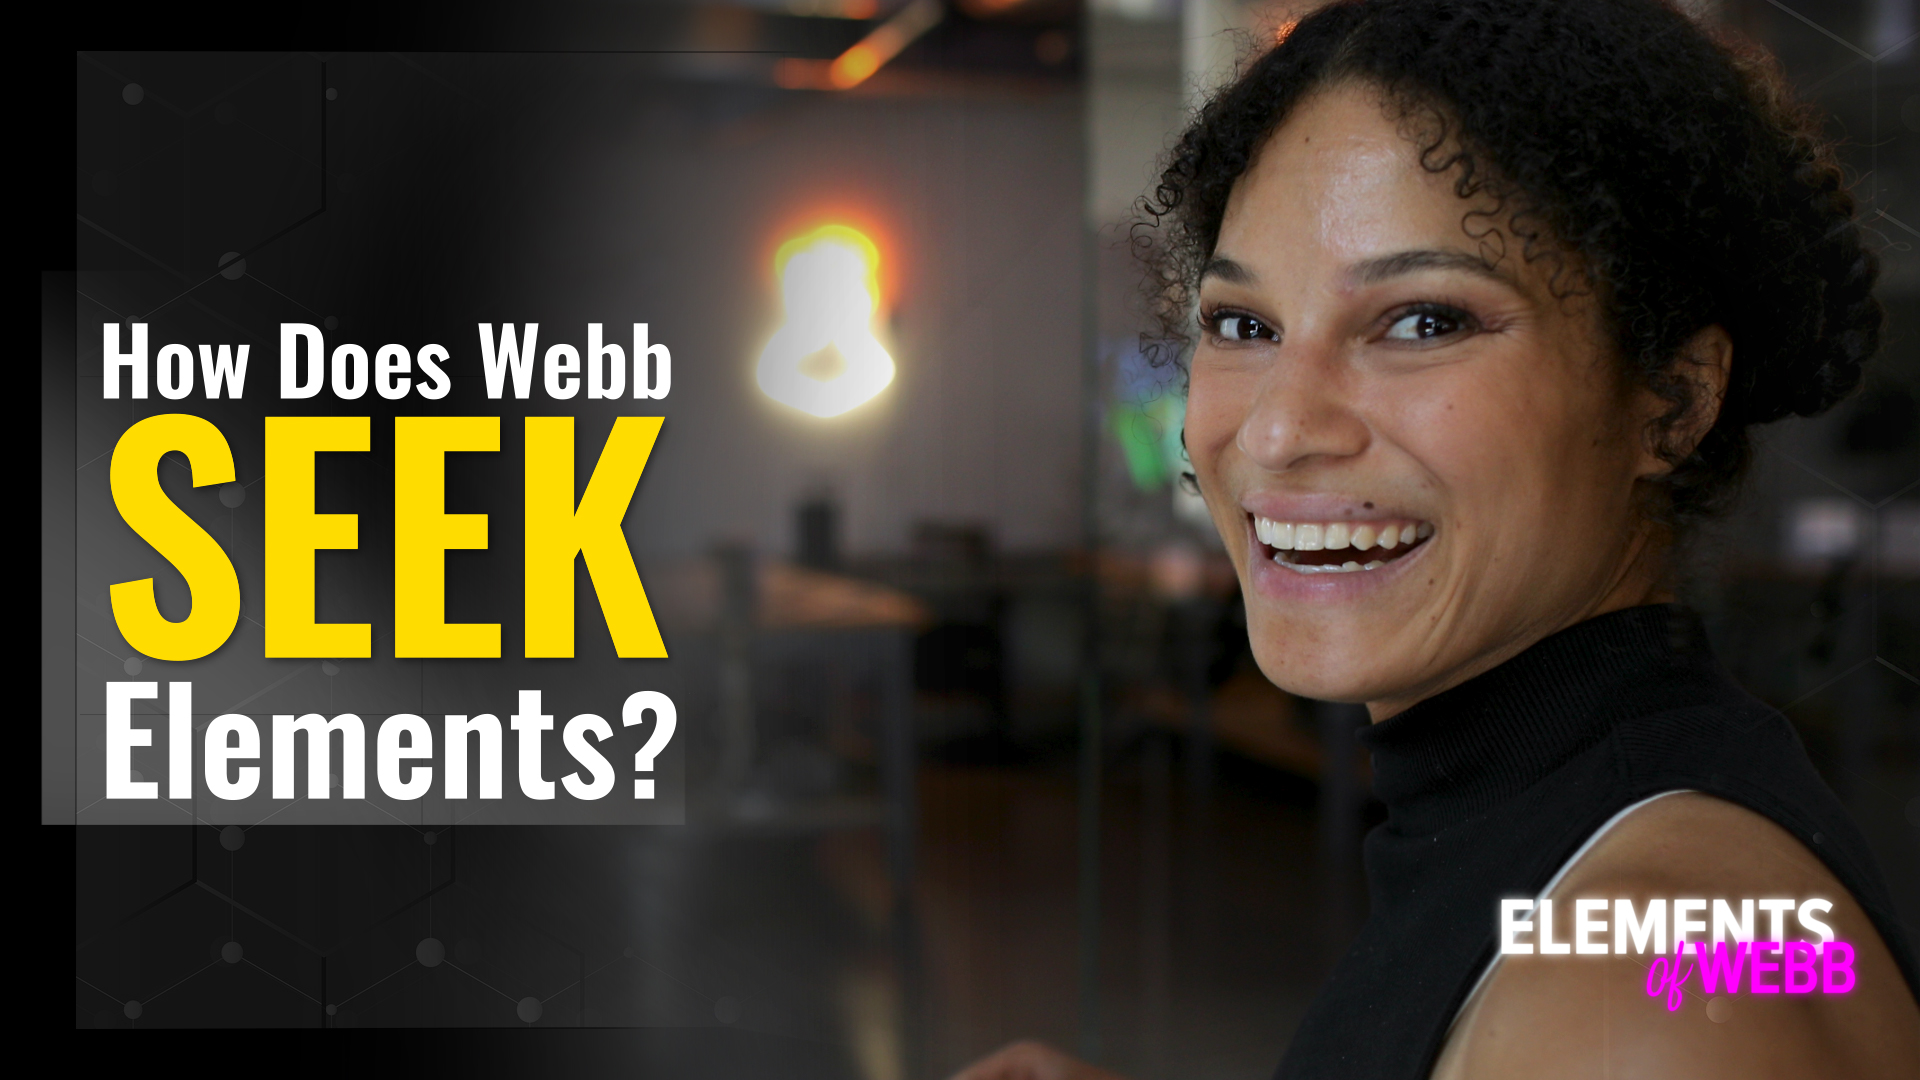 Elements of Webb EP12: Seeking Elements